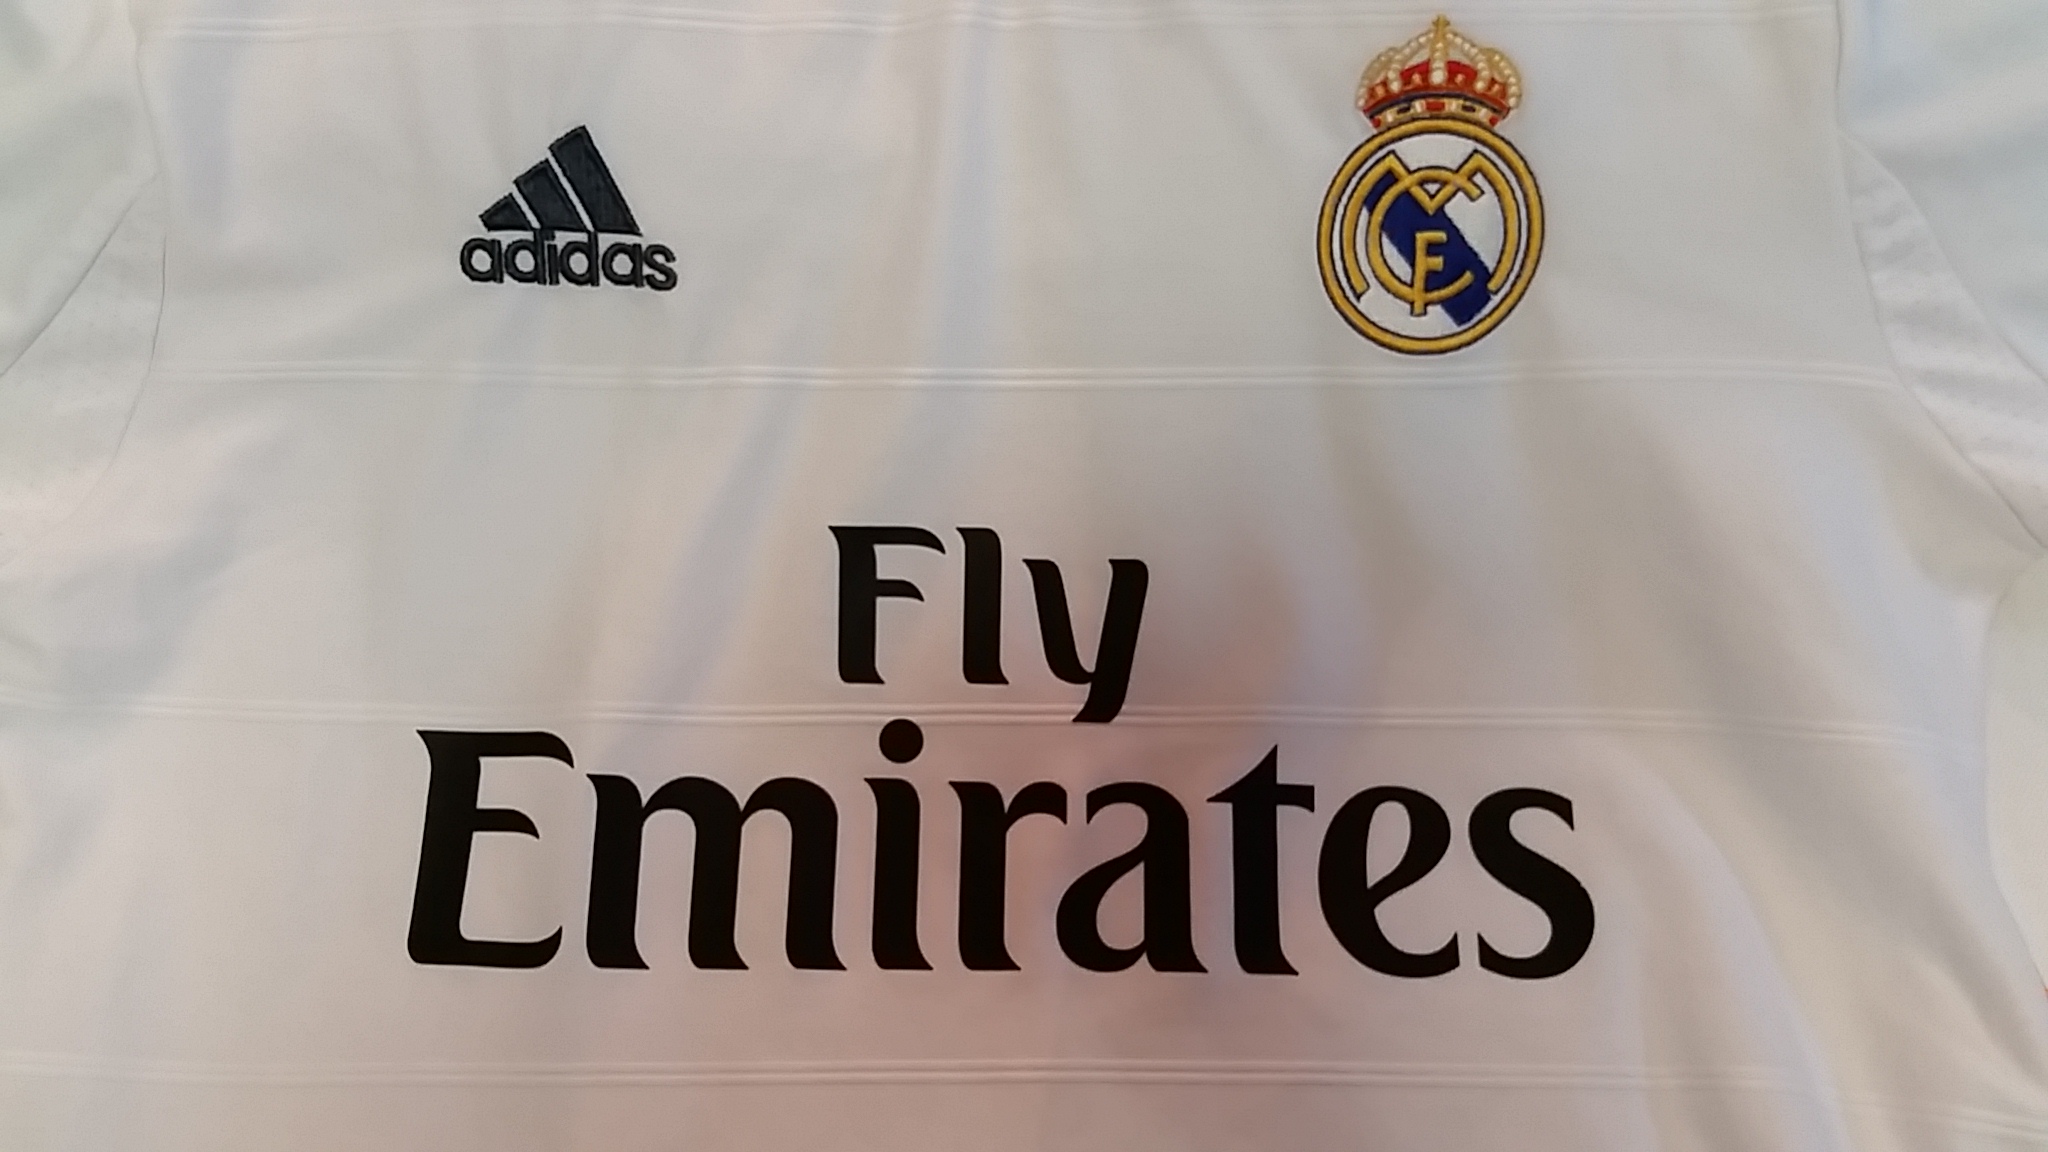 Cristiano Ronaldo Real Madrid Fly Emirates Soccer Jersey By Adidas